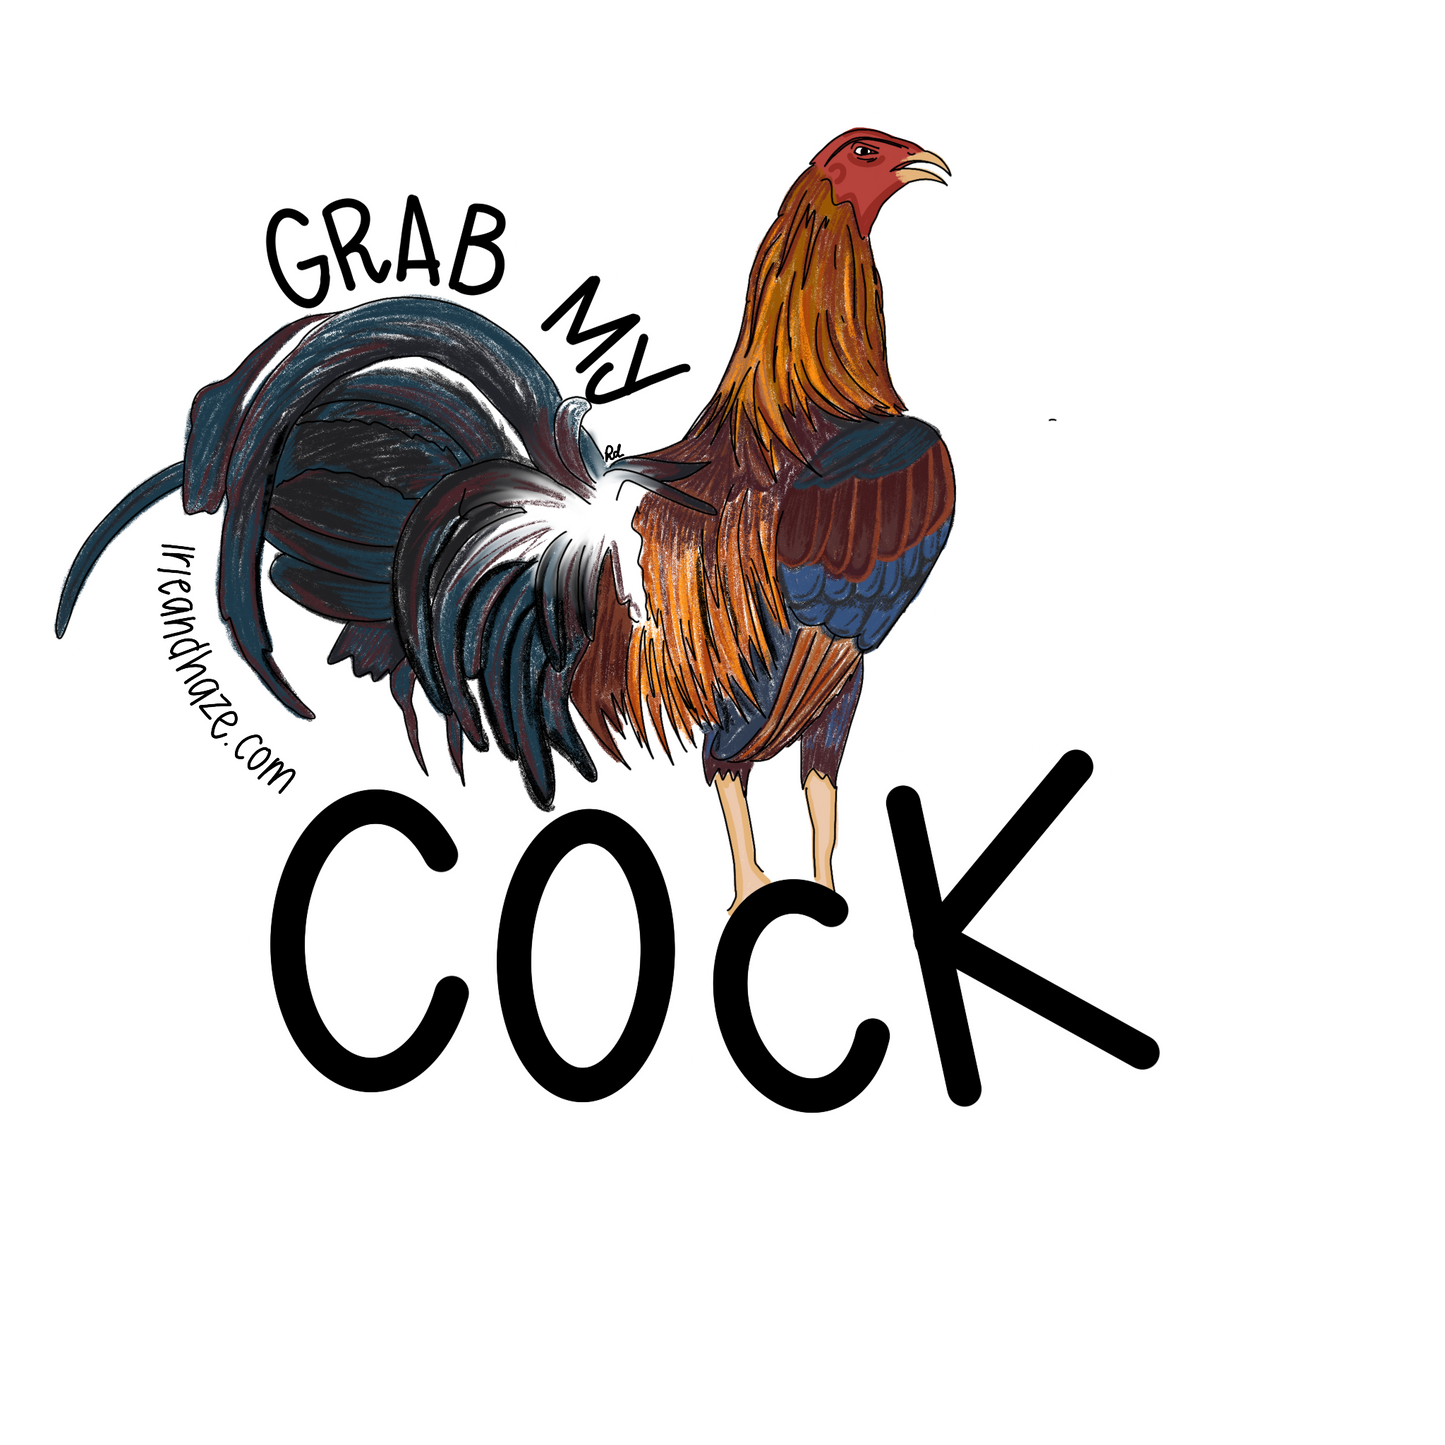 Grab my cock Phone Grip